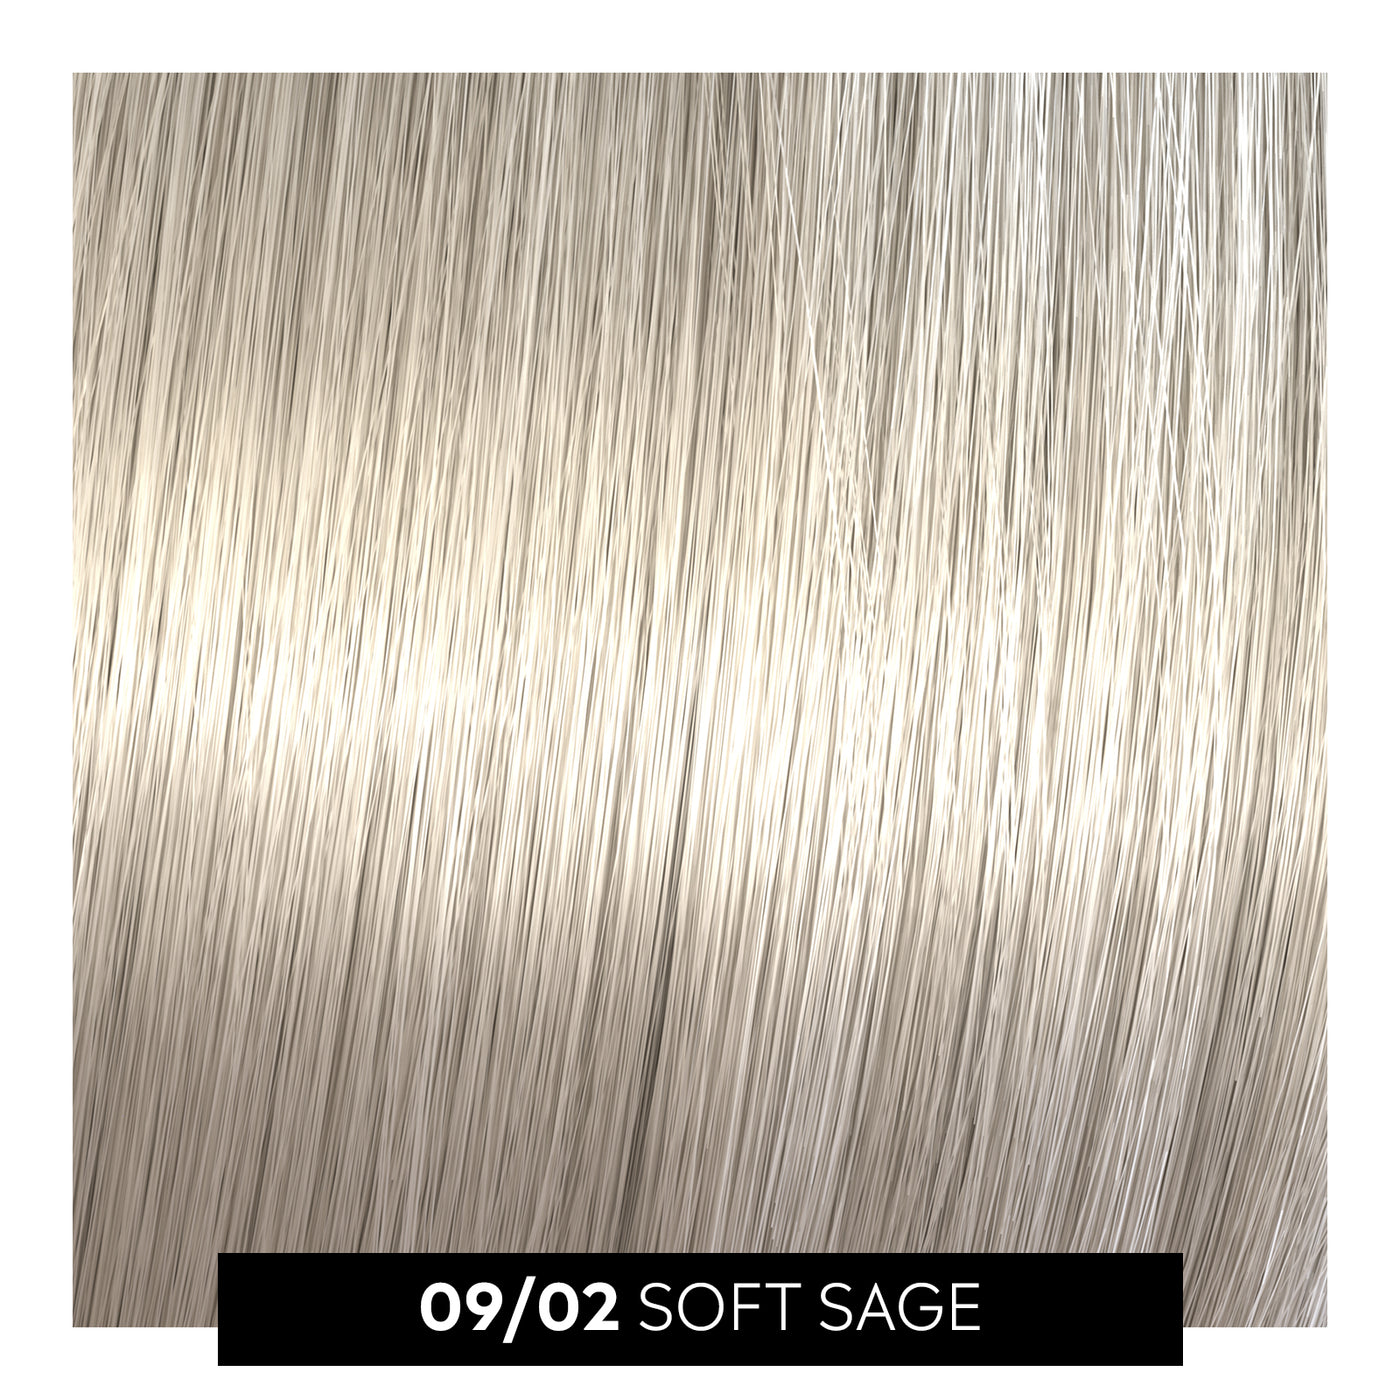 09/02 soft sage